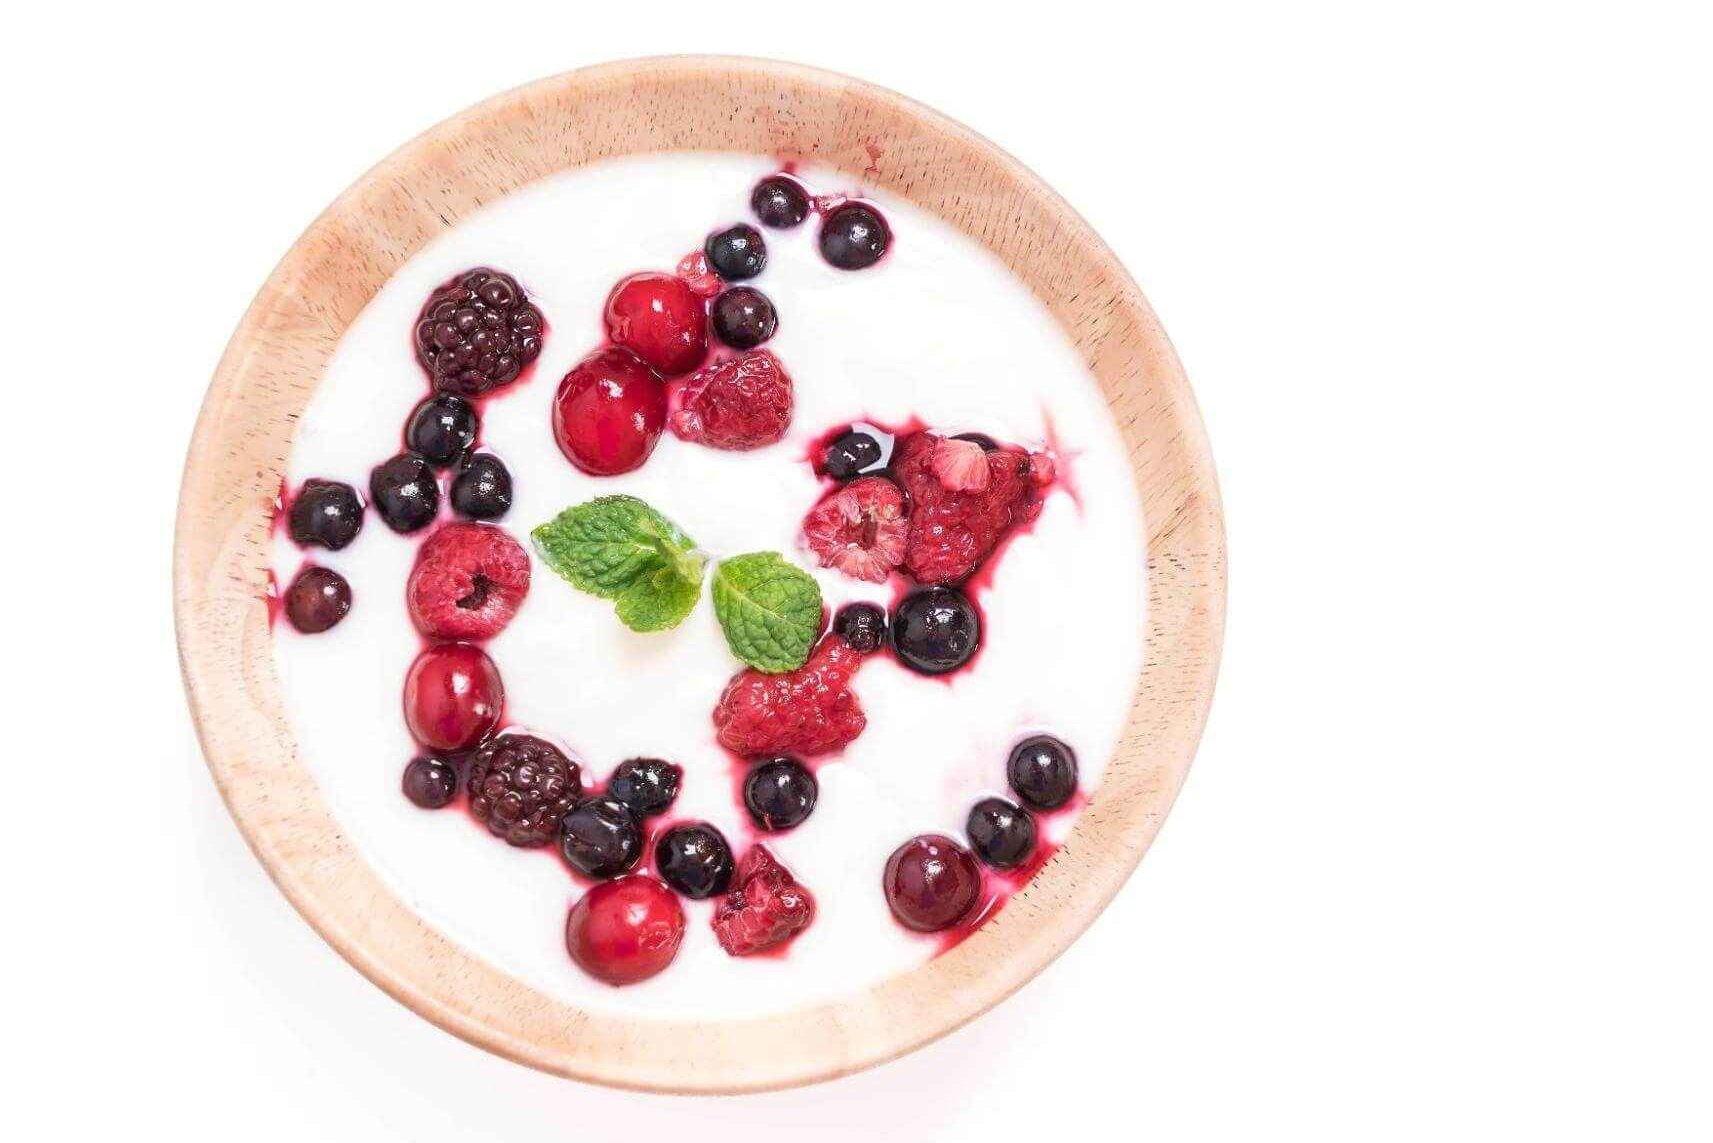 Greek Yogurt with Fruits in a bowl